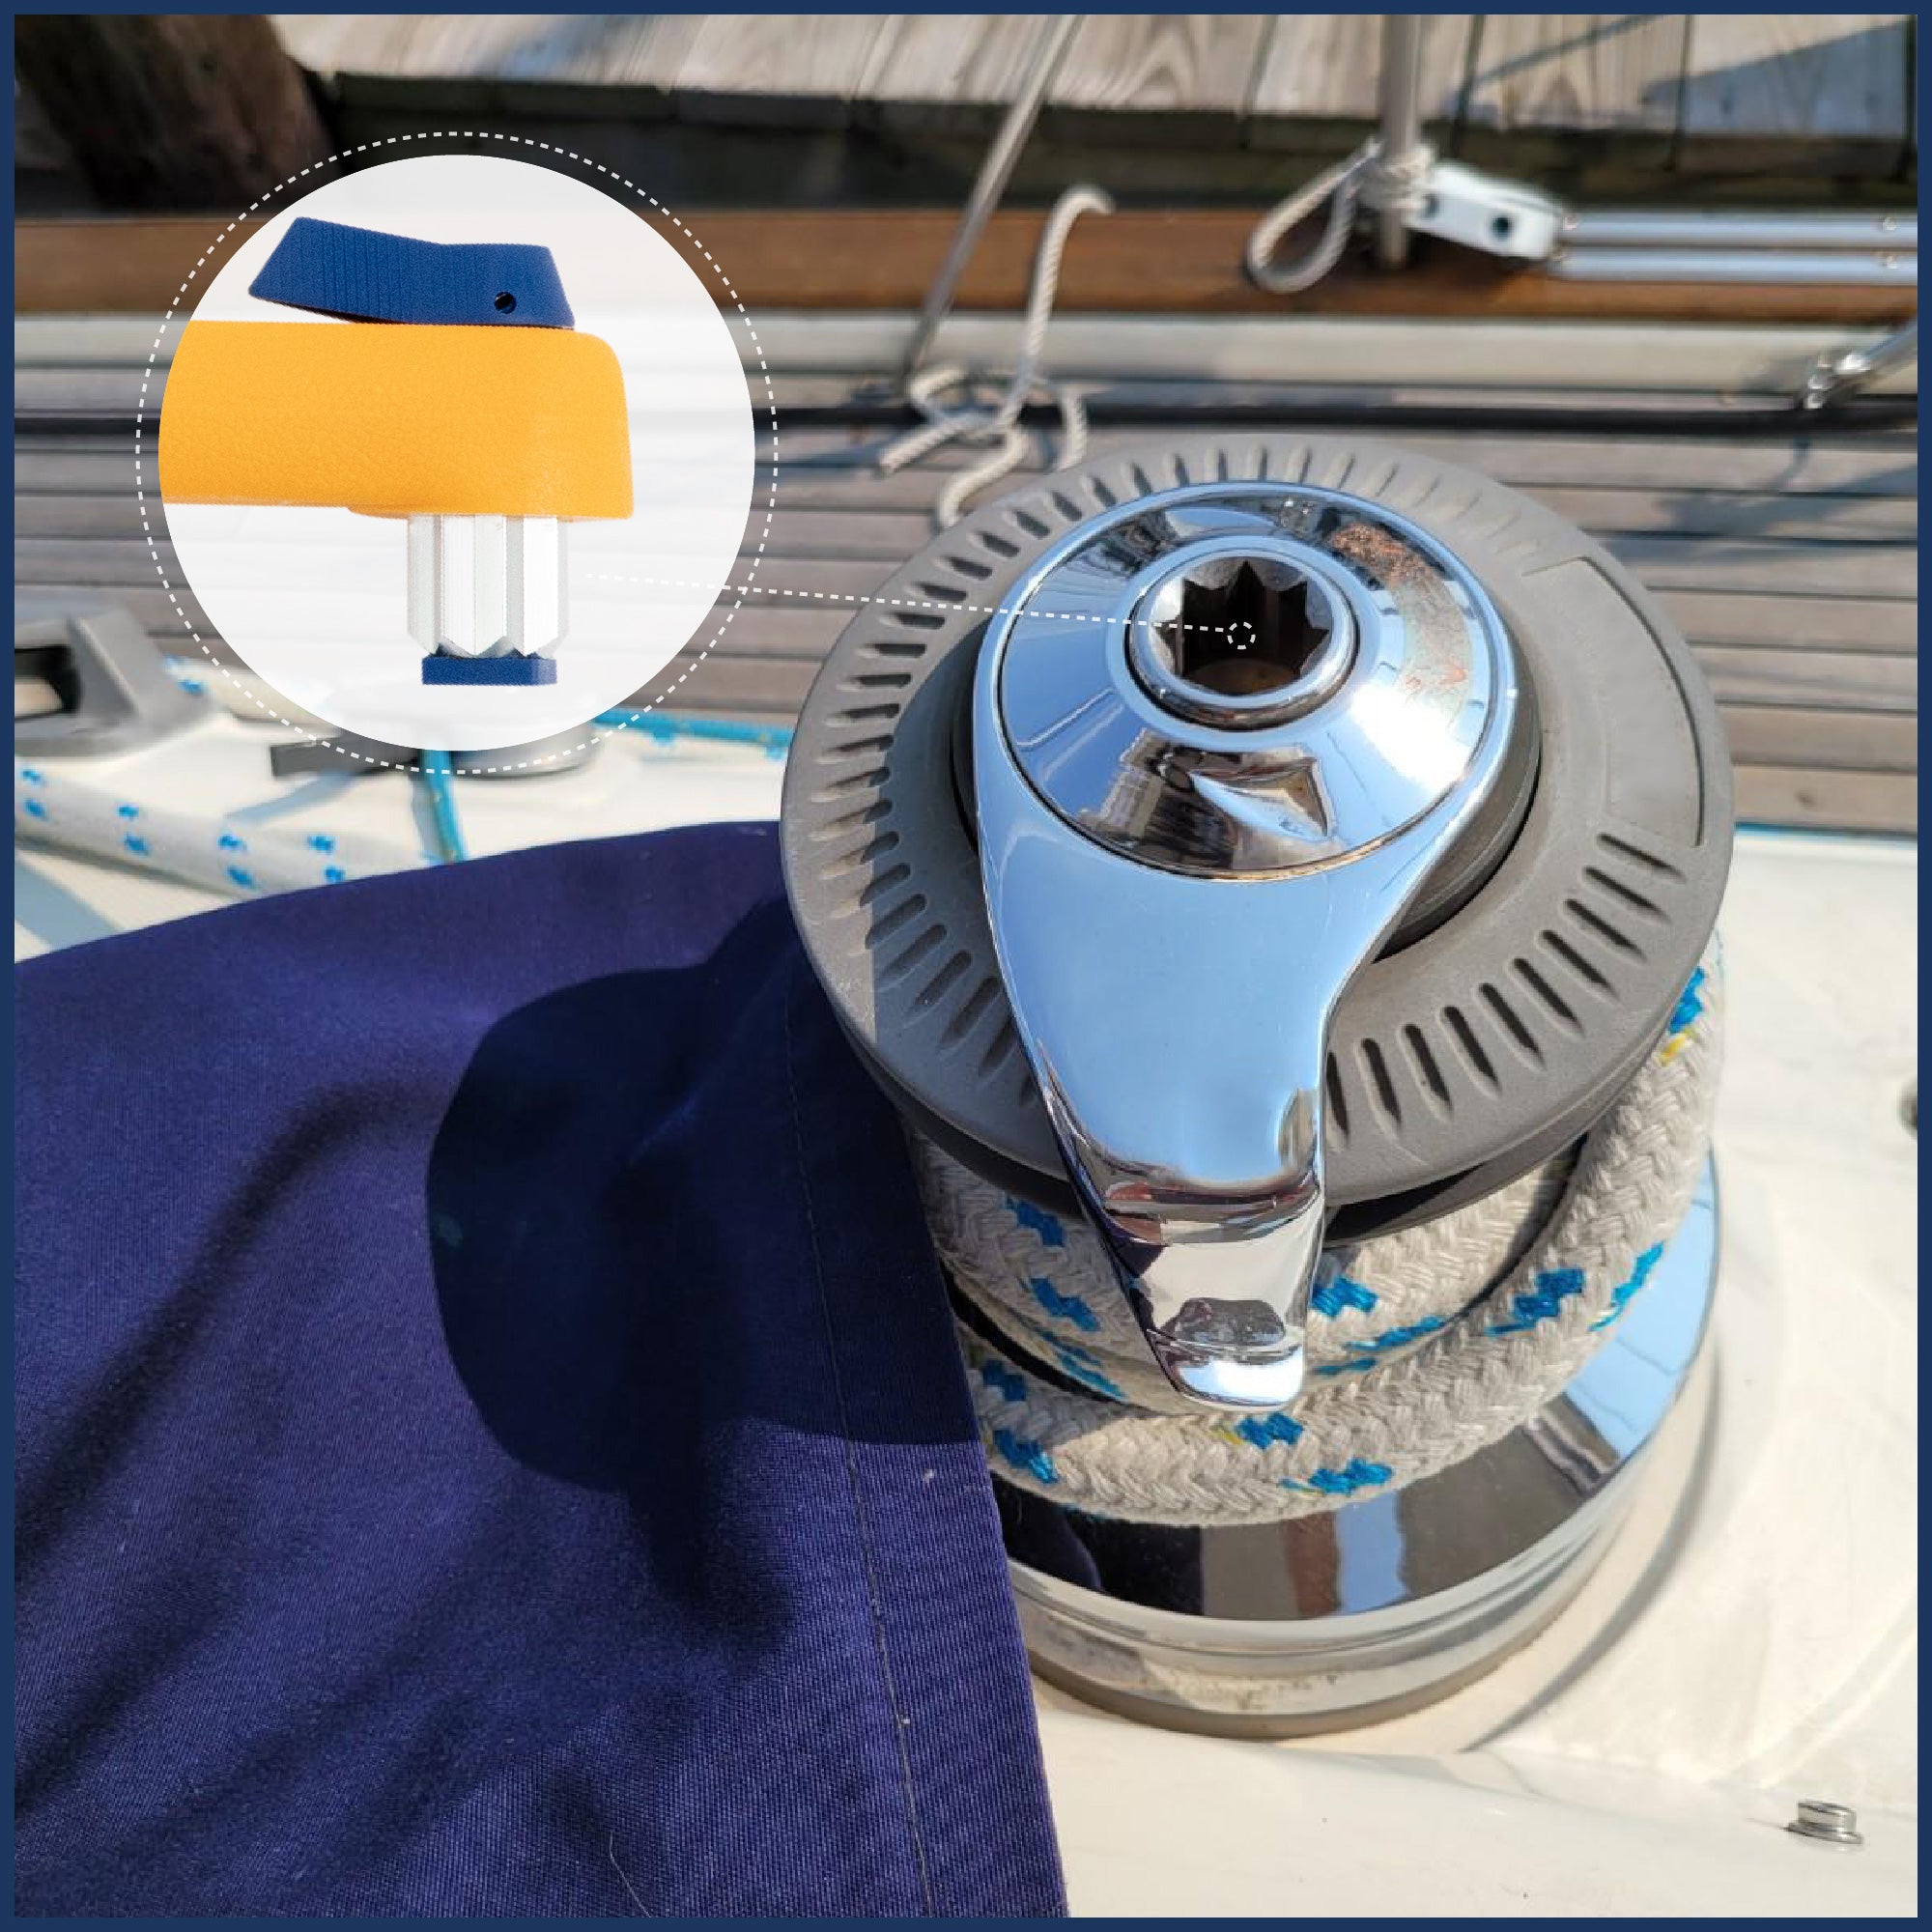 8" Sailboat Winch Handle, Universal Floating Lock-in Mechanism, Orange/Blue - FO86